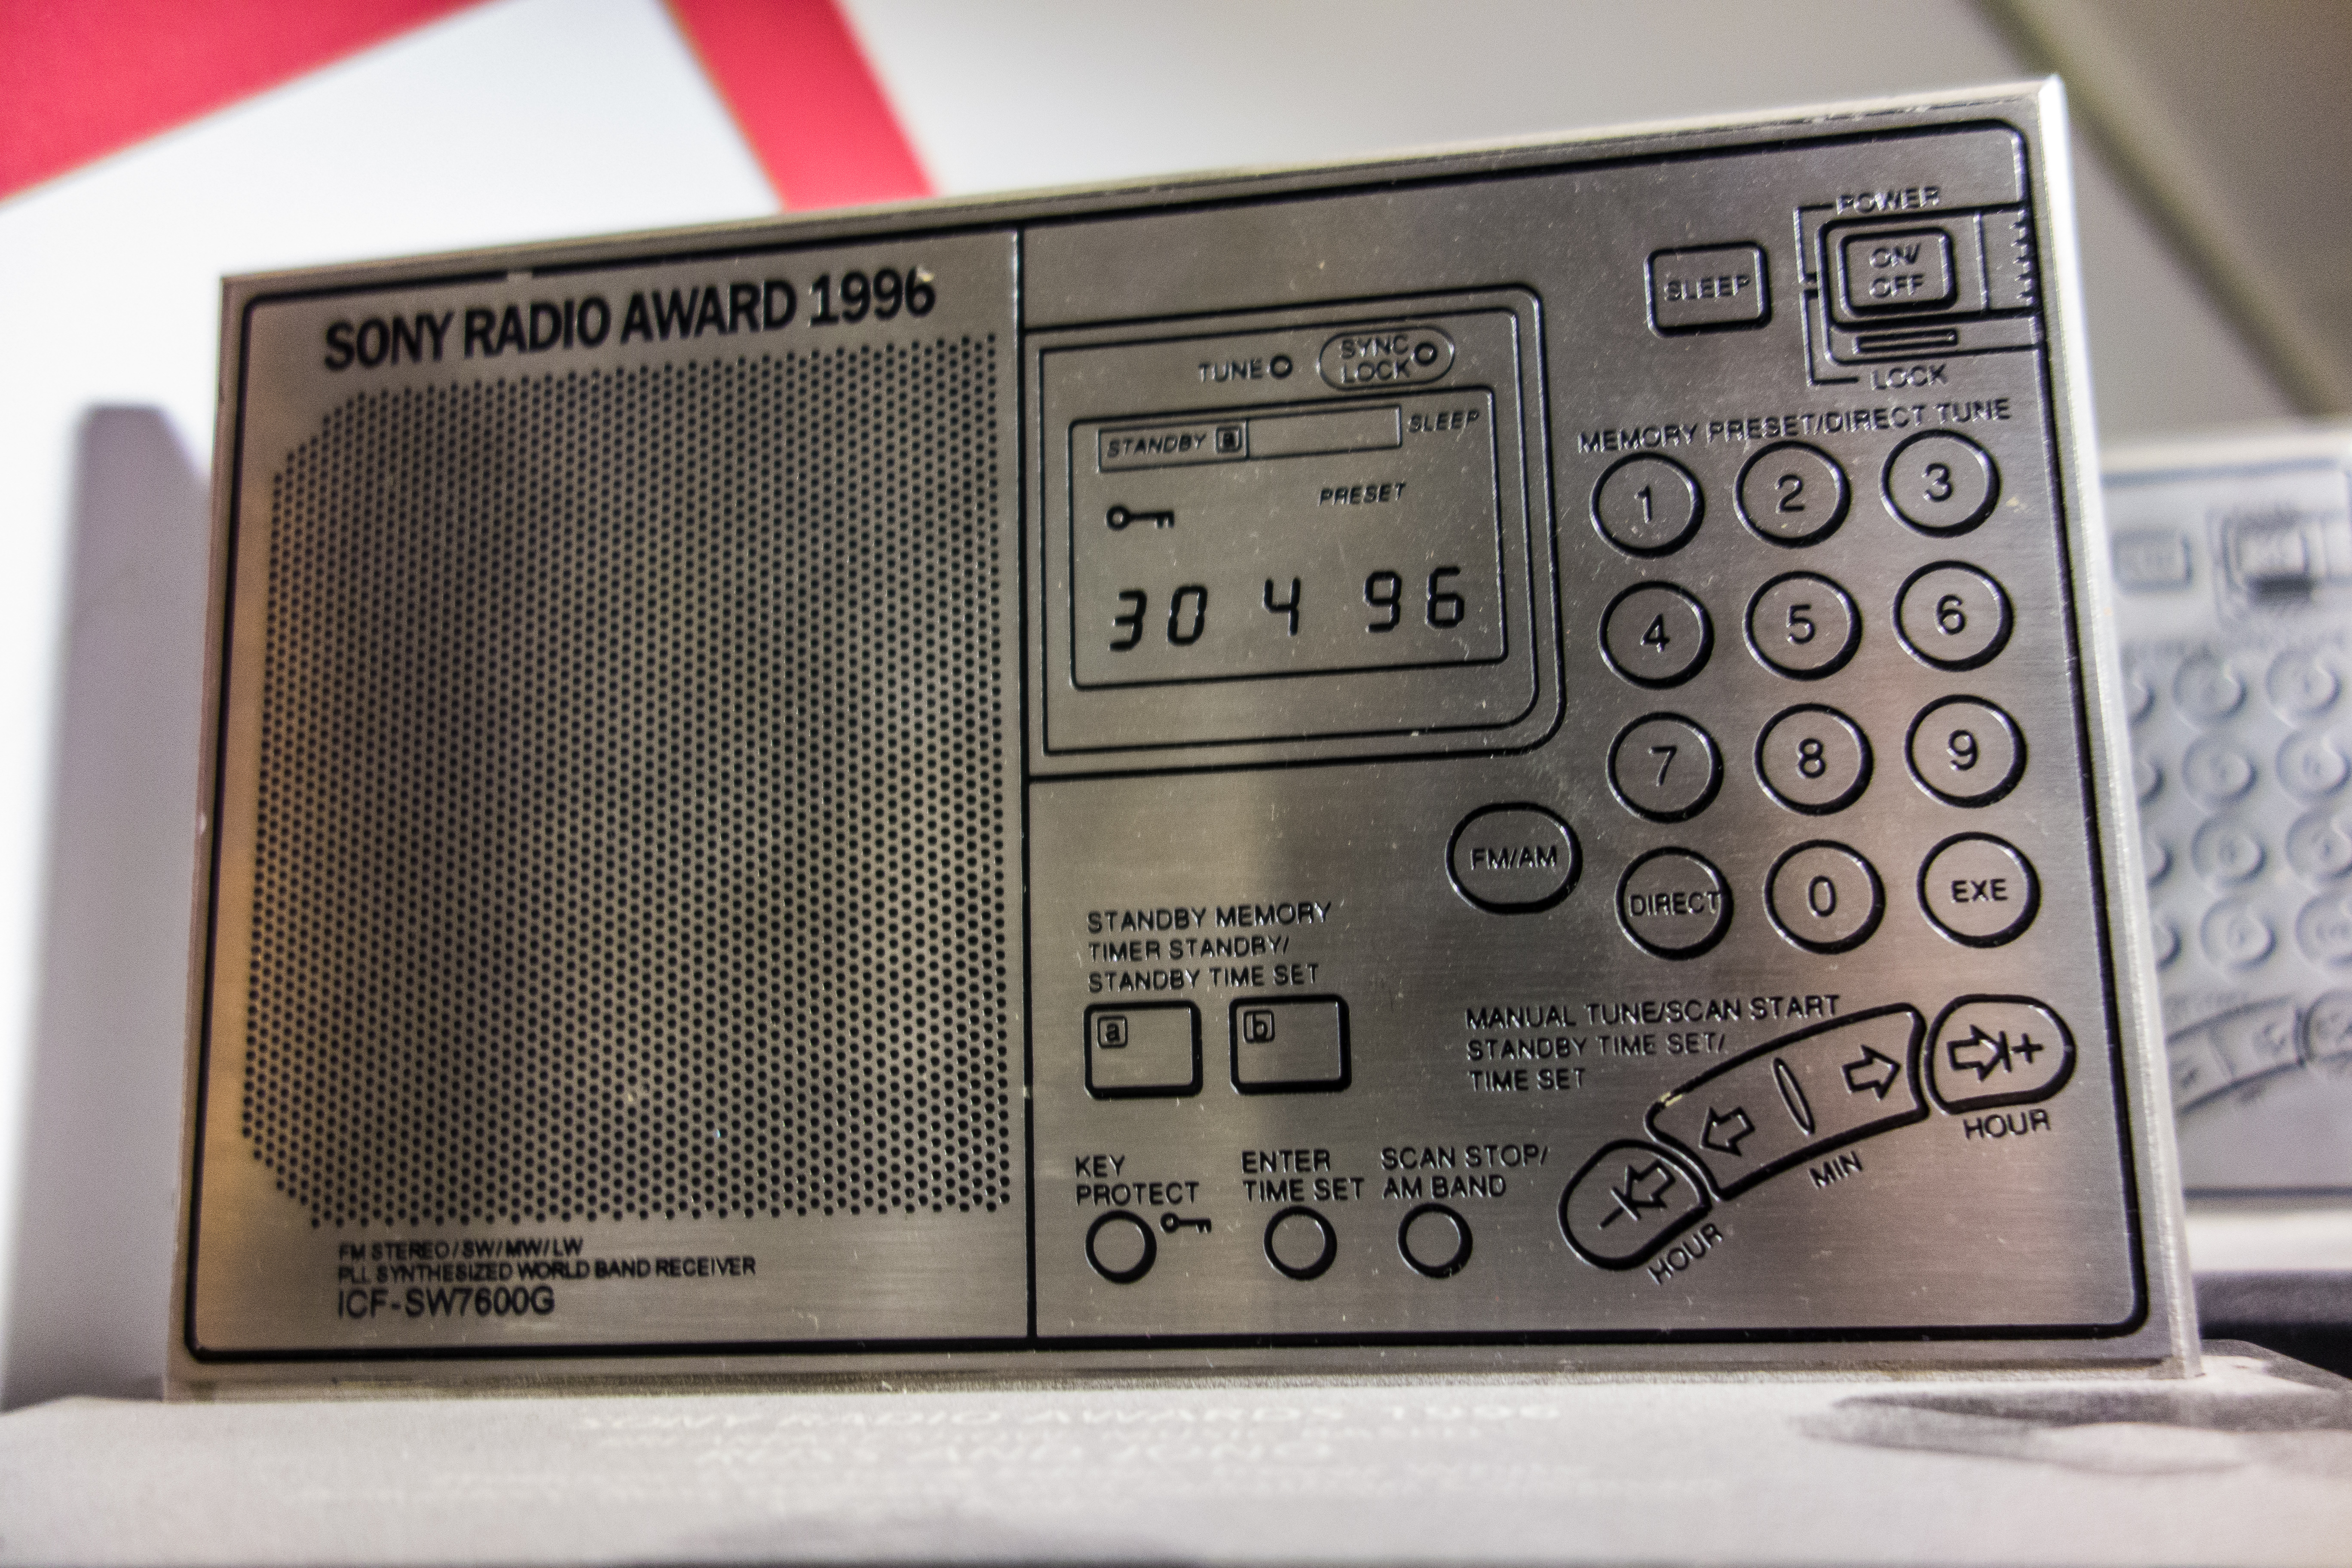 File:Sony ICF-36 portable radio - overview.JPG - Wikipedia